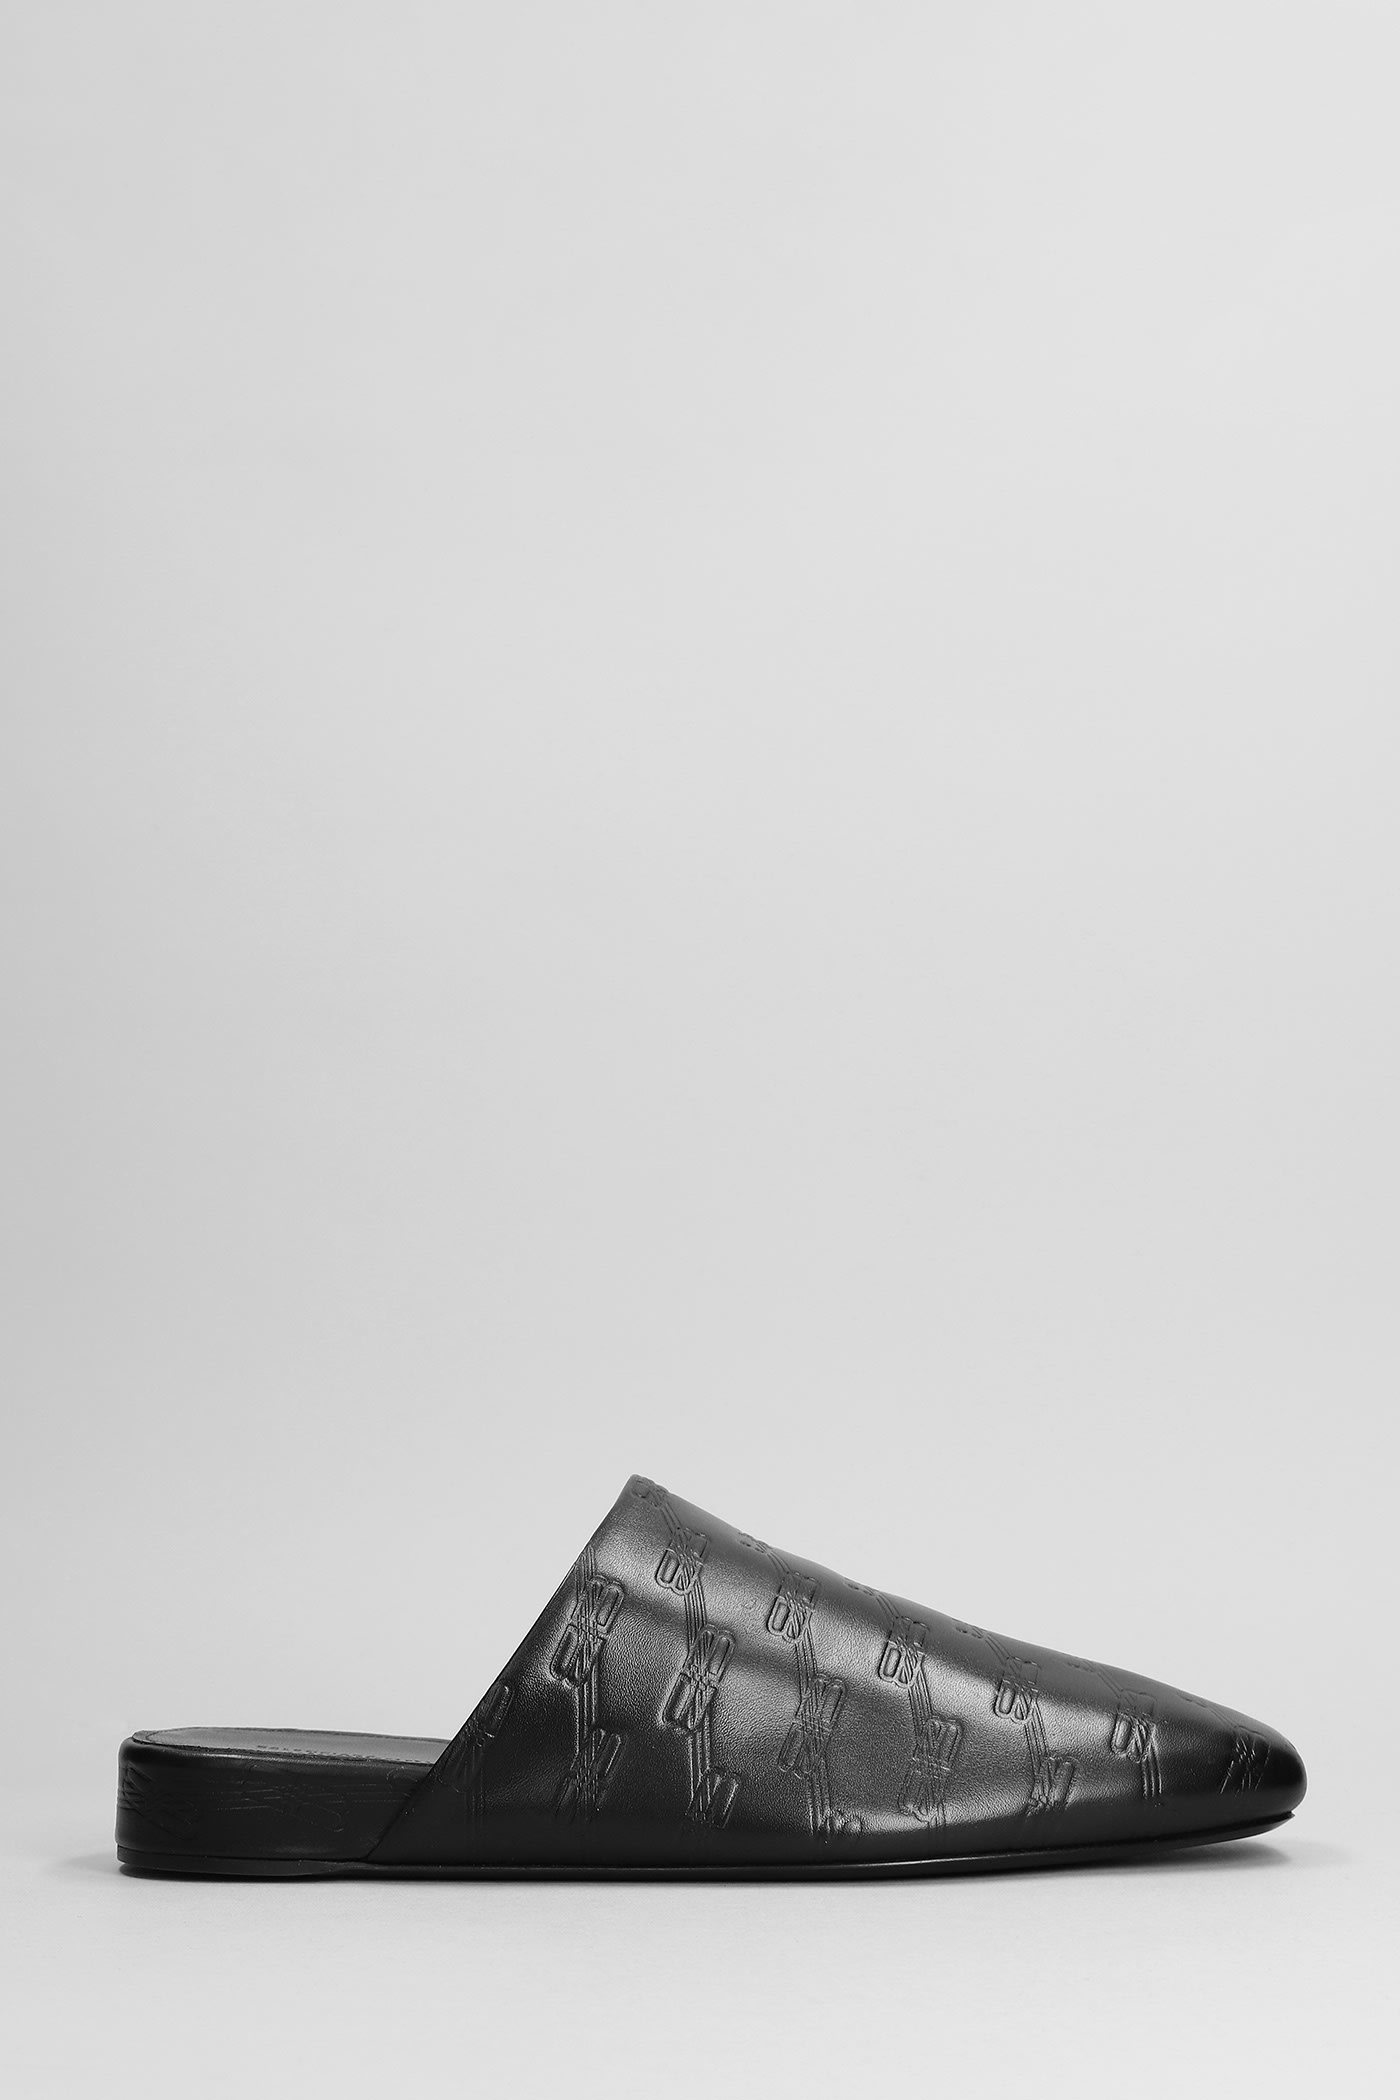 Balenciaga Slipper-mule In Black Leather